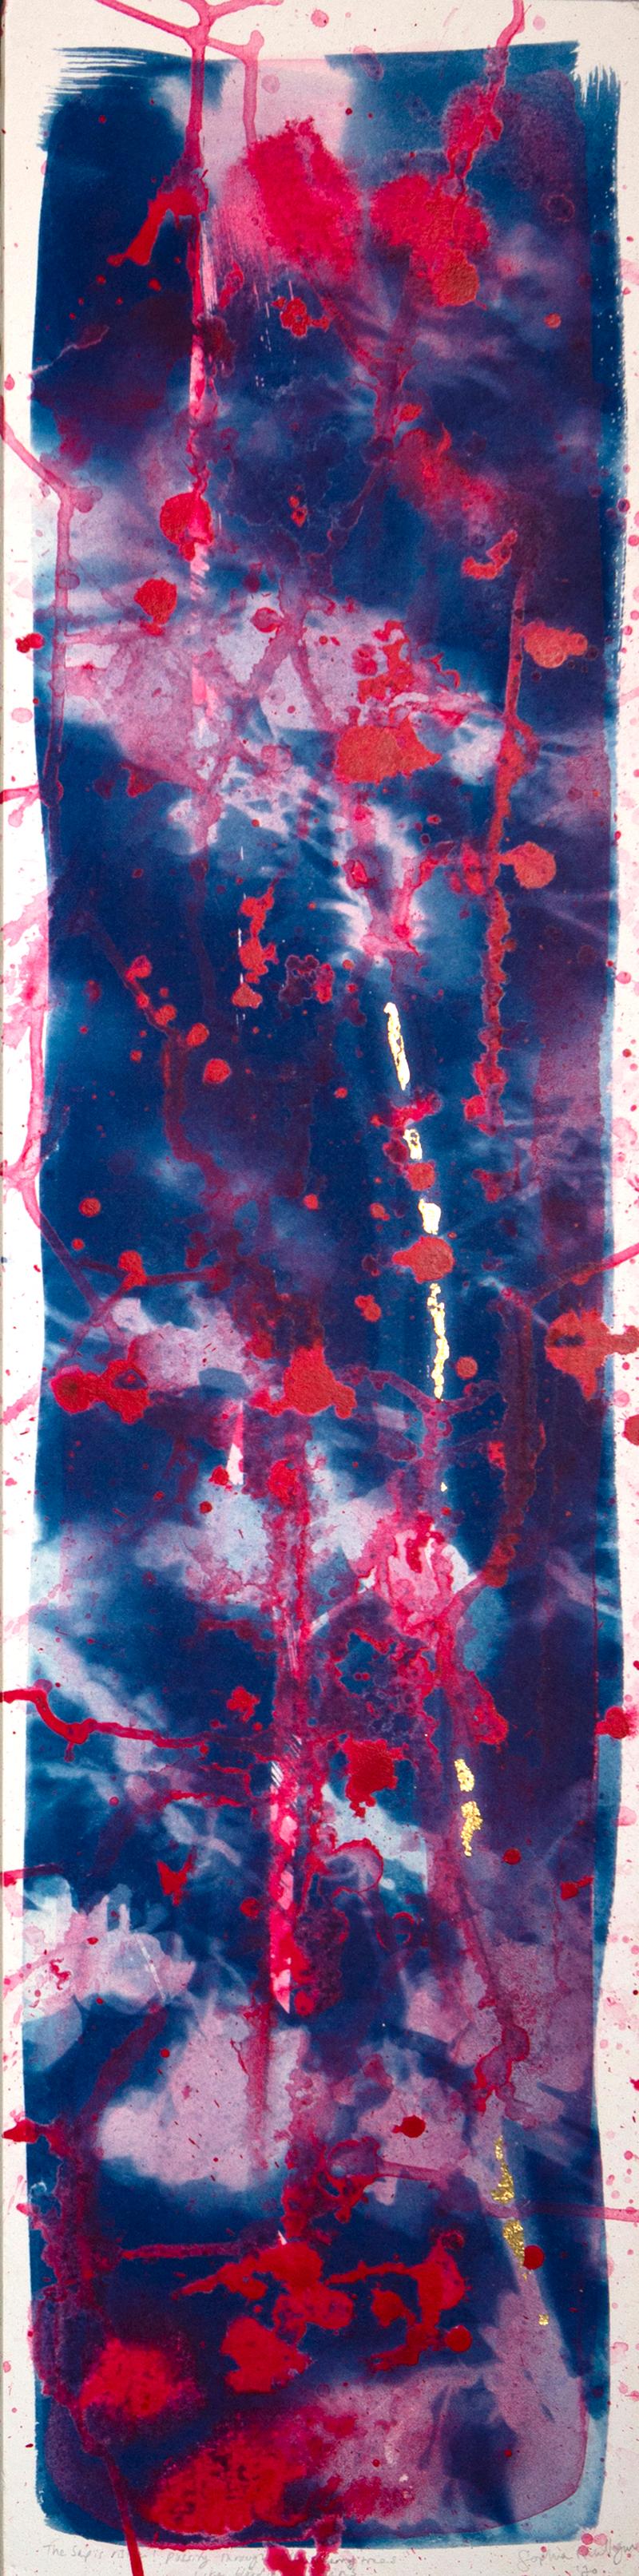 'Blood in the Veins'. Cherry blossom pink white blue magenta abstract sakura